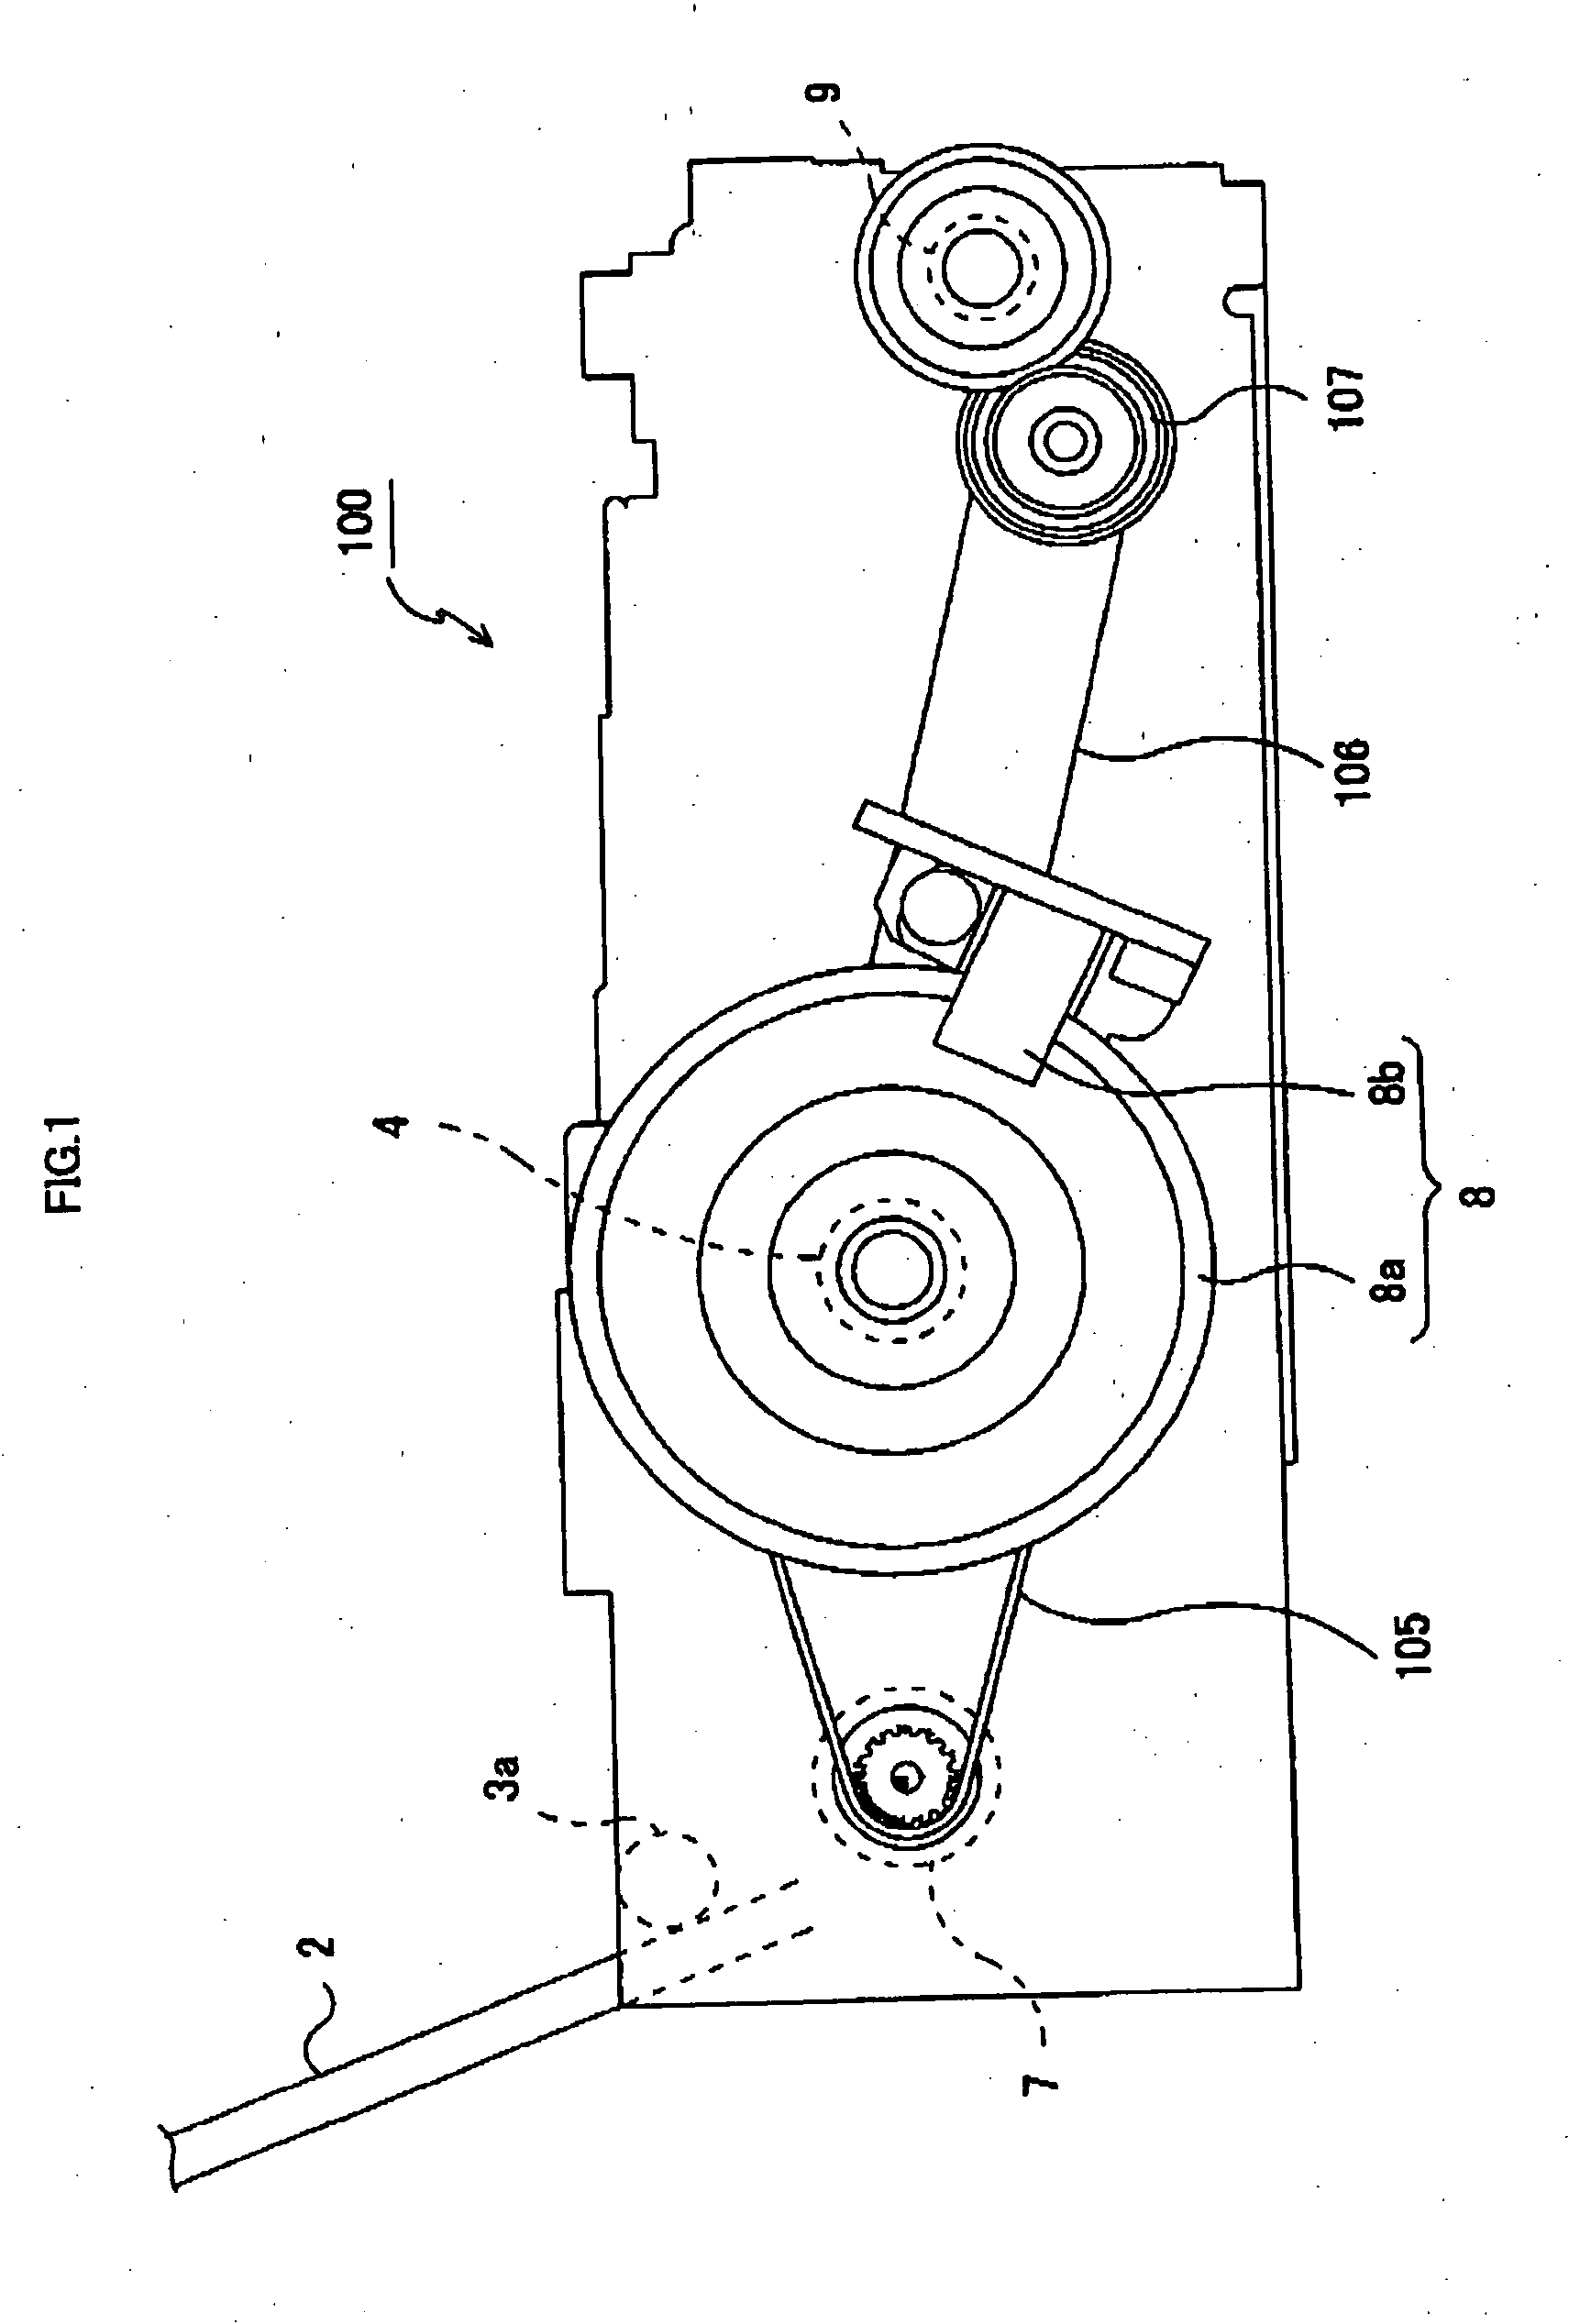 Motor control device